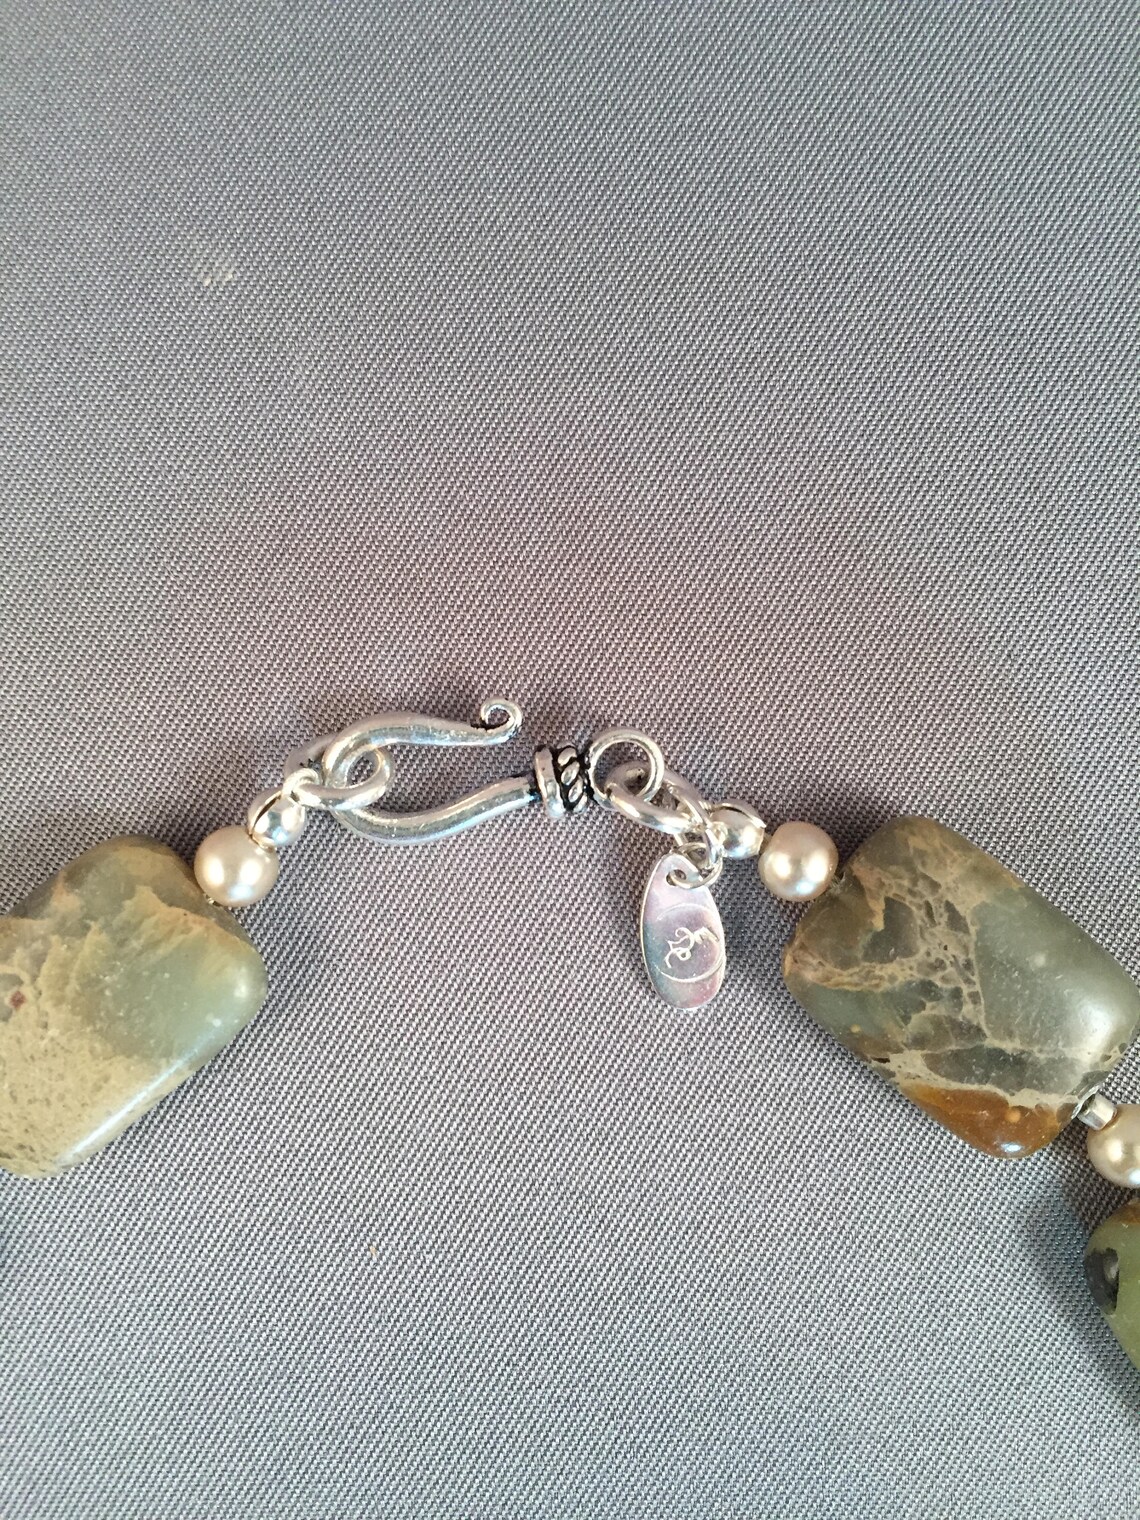 Blue Serpentine Pearl Sterling Silver Necklace Earrings - Etsy